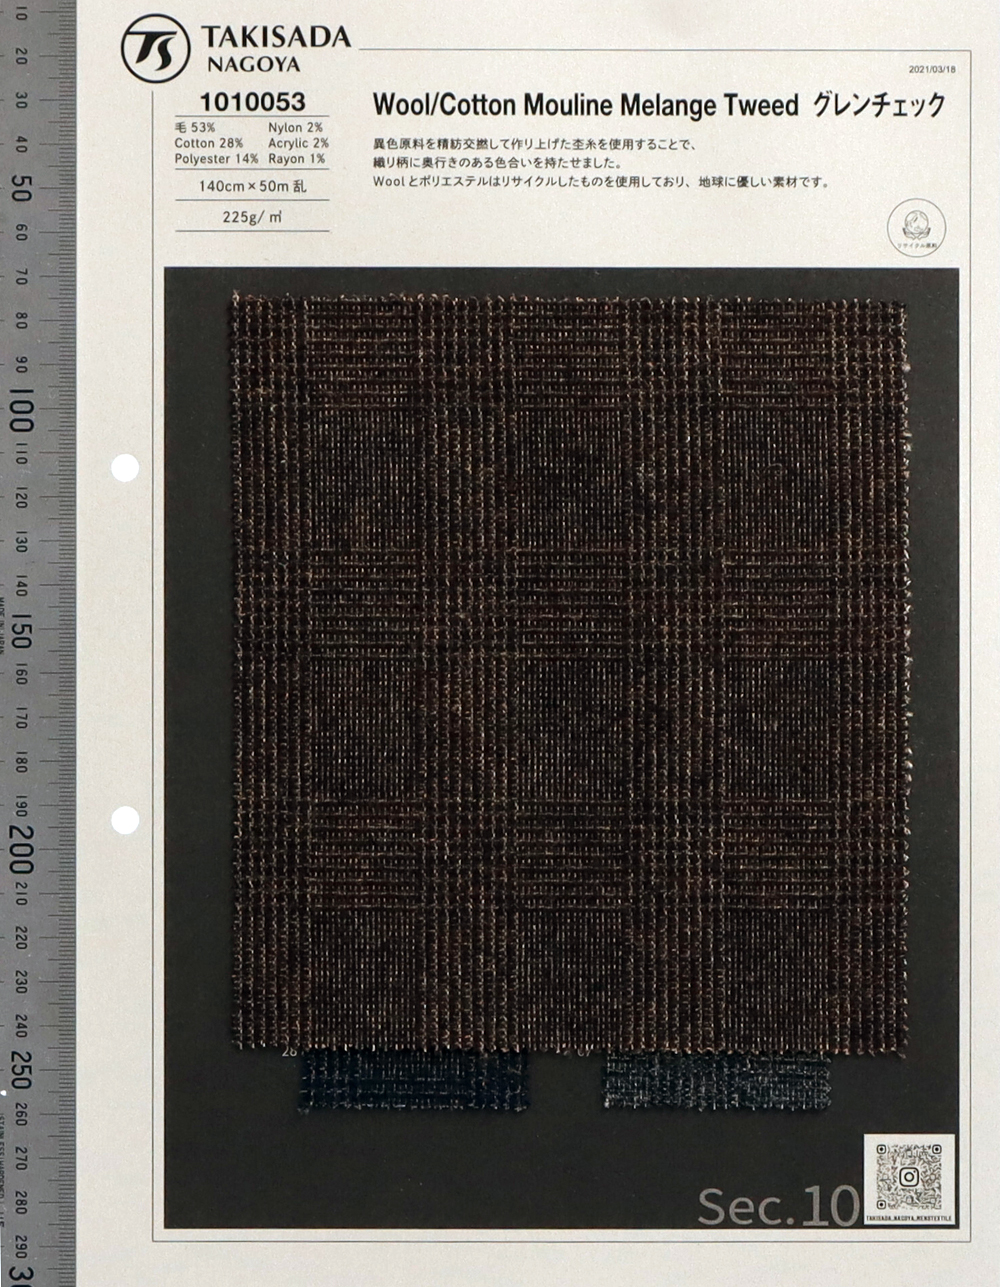 1010053 RE: NEWOOL® Wool / Cotton Melange Tweed Glen Check[Textile / Fabric] Takisada Nagoya